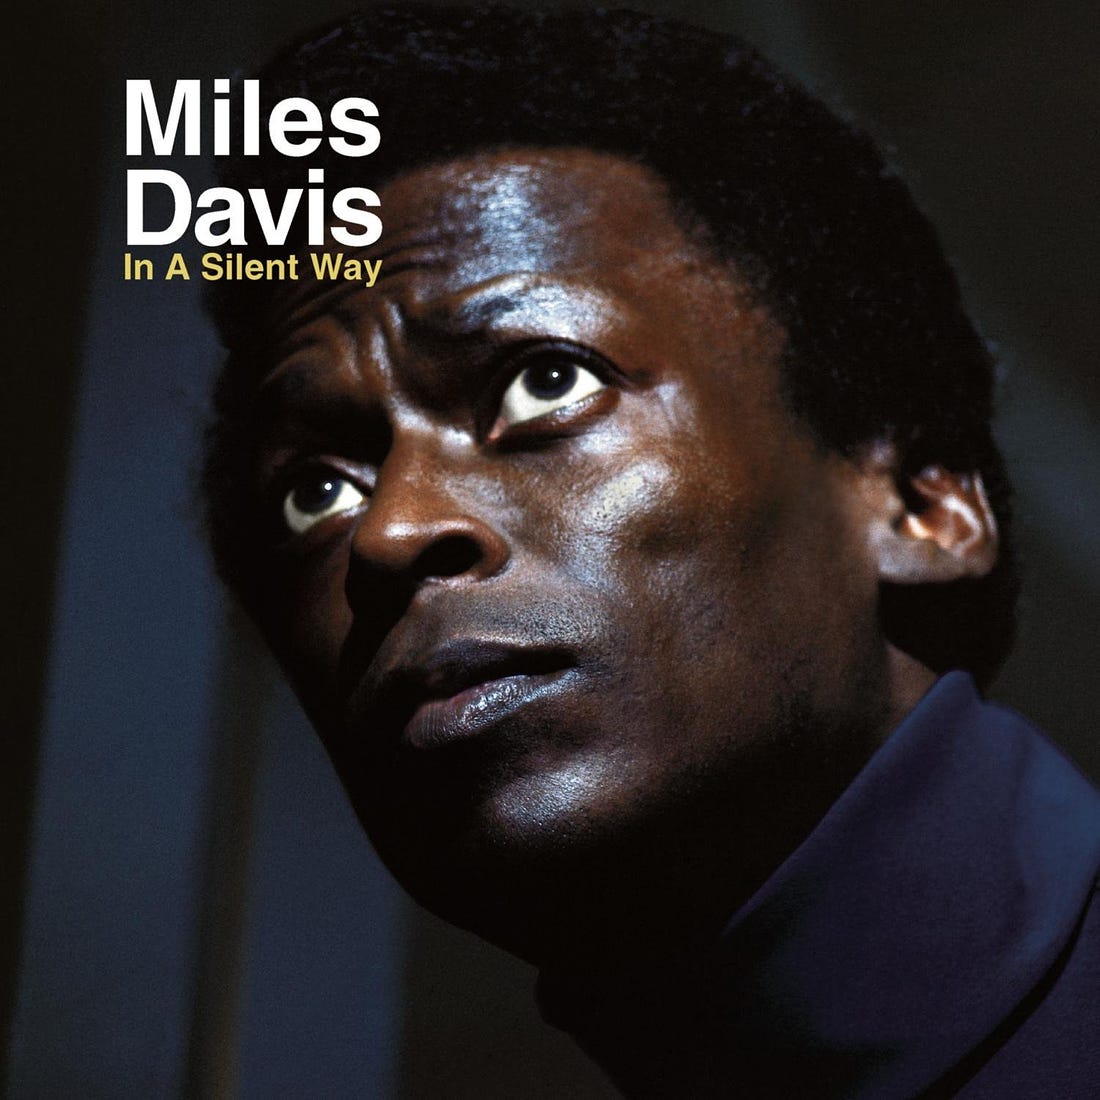 Miles Davis - In a Silent Way - Amazon.com Music